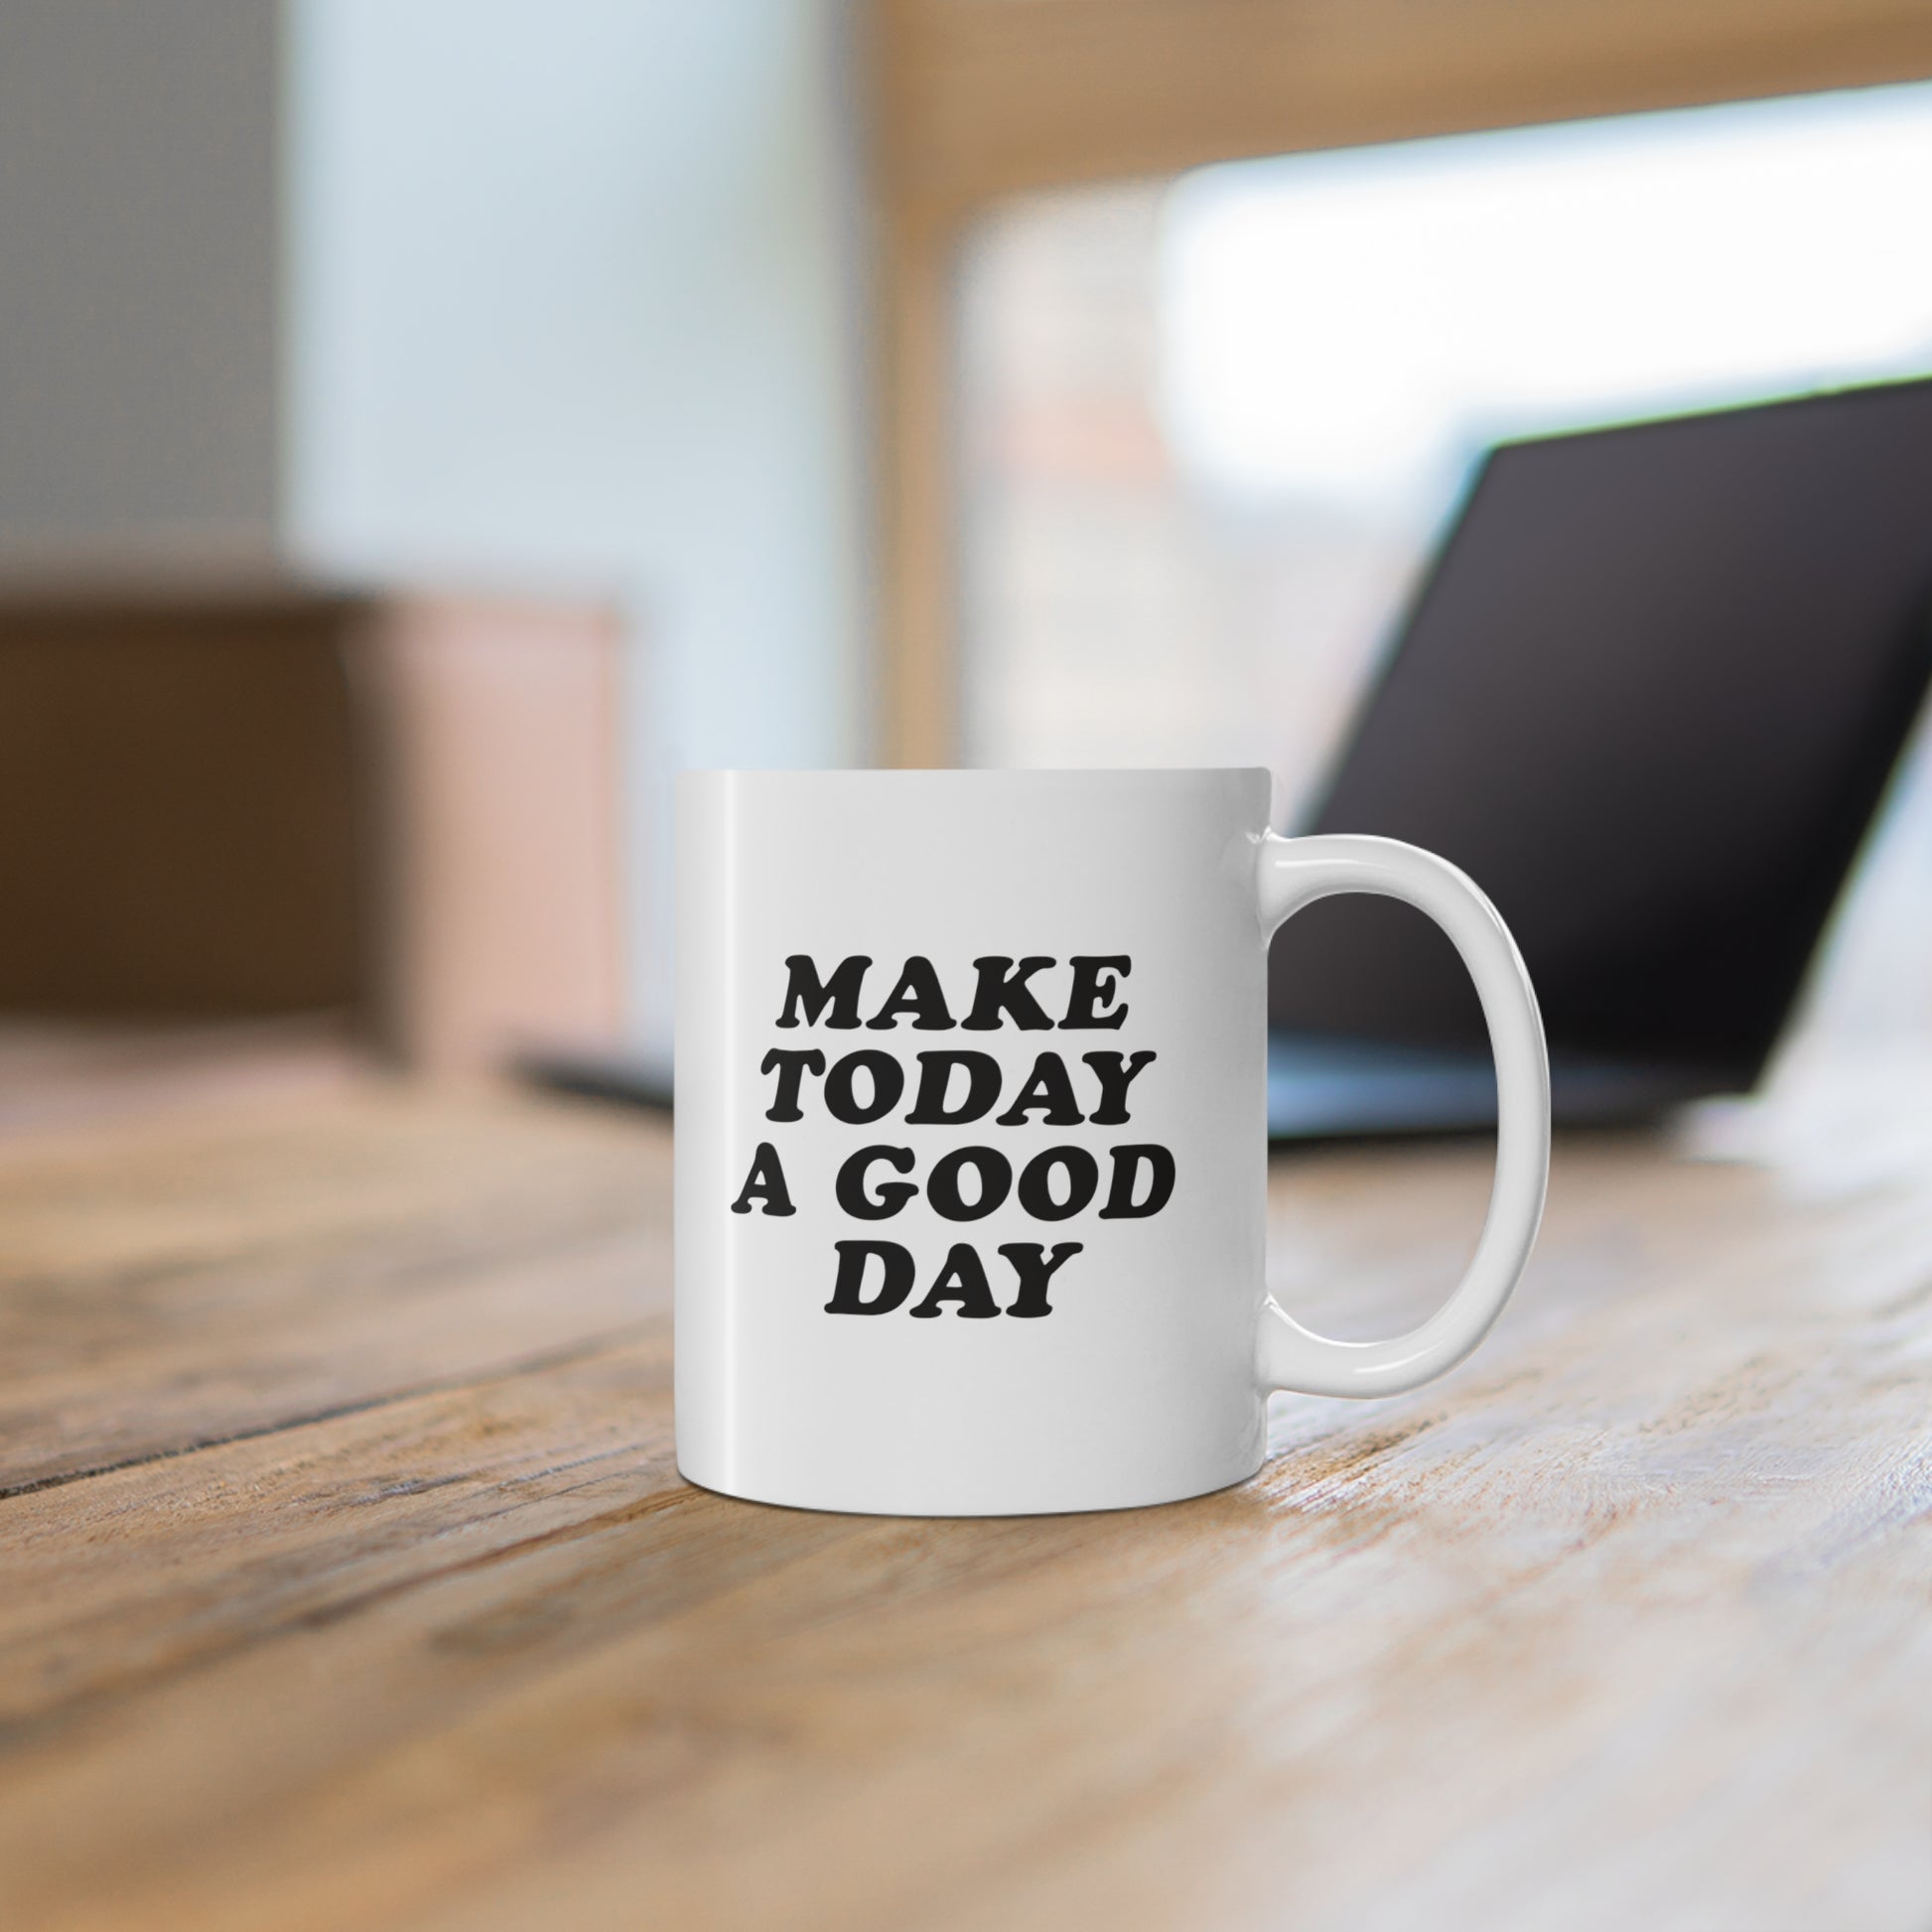 11oz ceramic mug with quote Make Today a Good Day